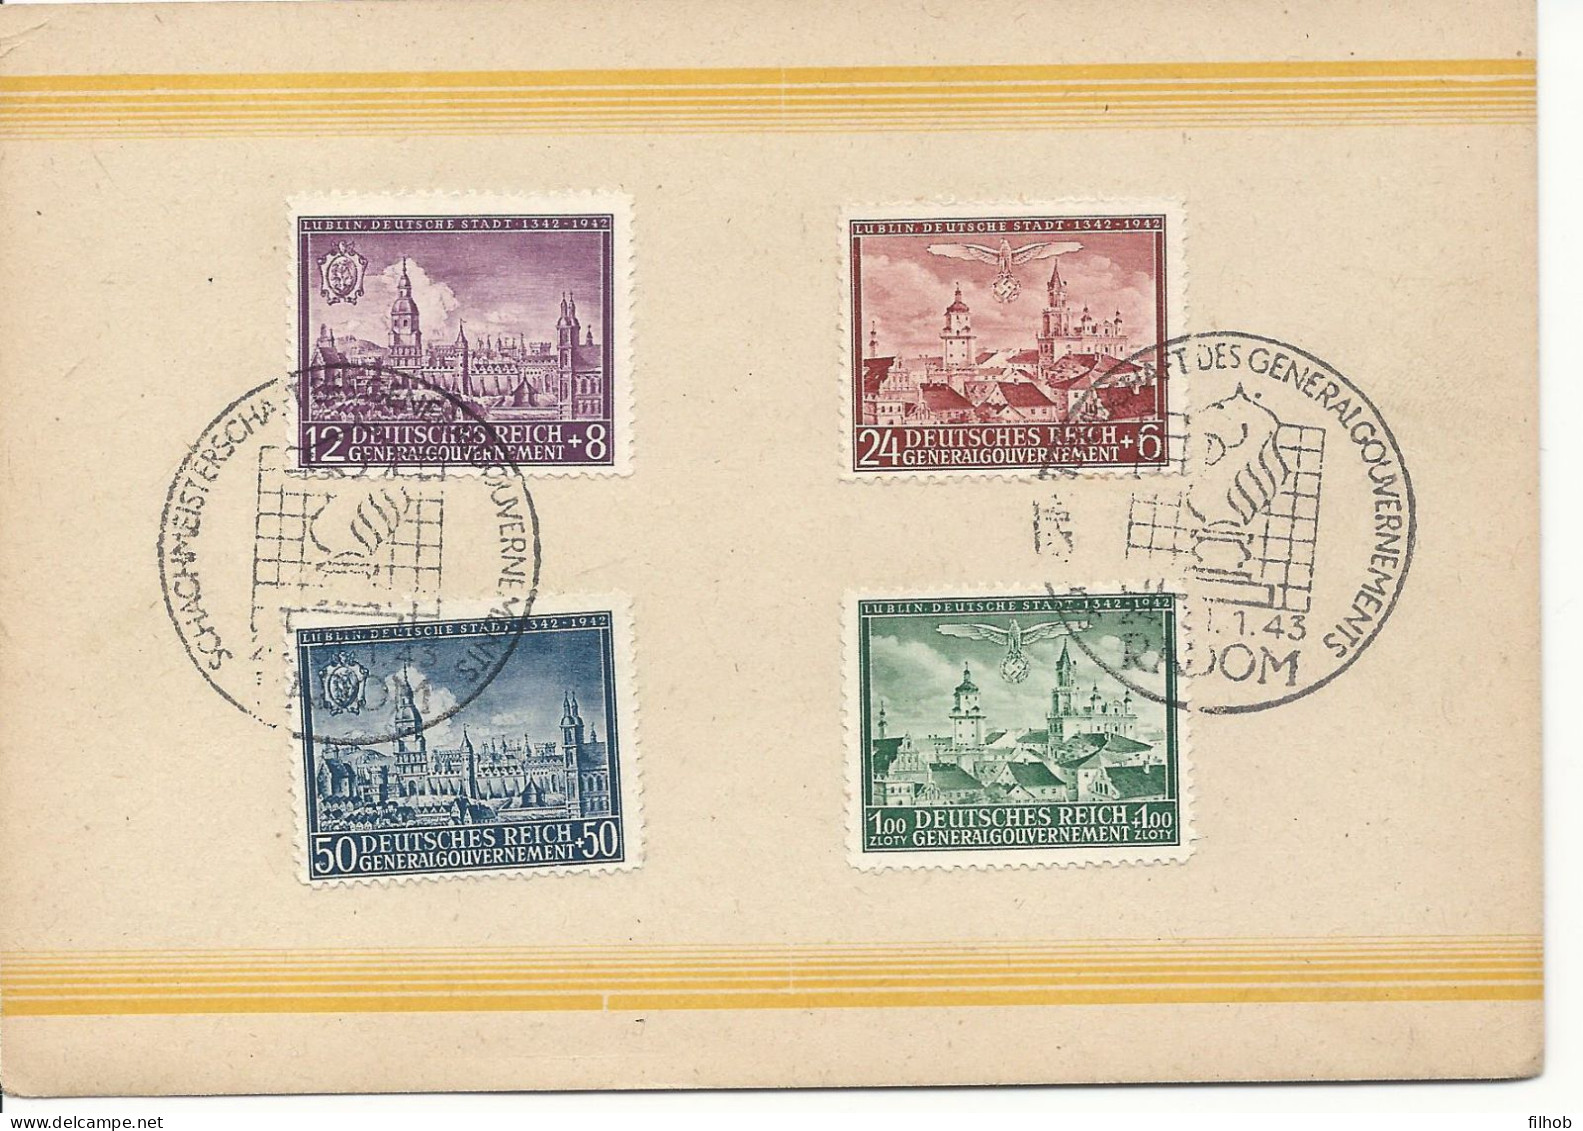 Poland GG Postmark (A211): 1943.01.24 Radom Sport Chess Competition - Generalregierung